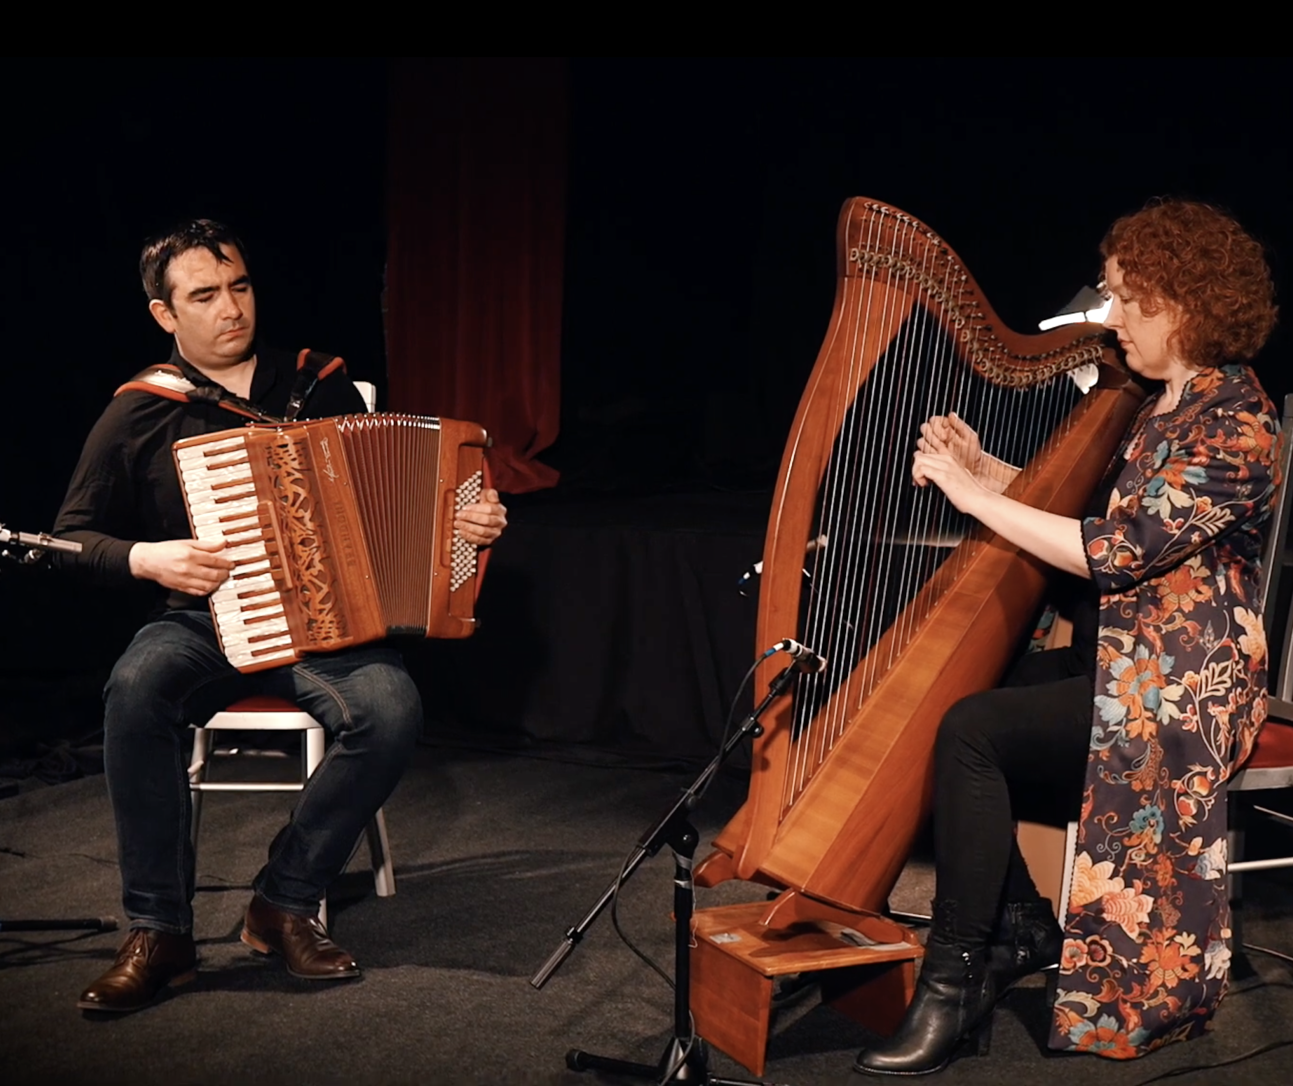 Tríona Marshall playing harp & Martin Tourish playing accordion in black background